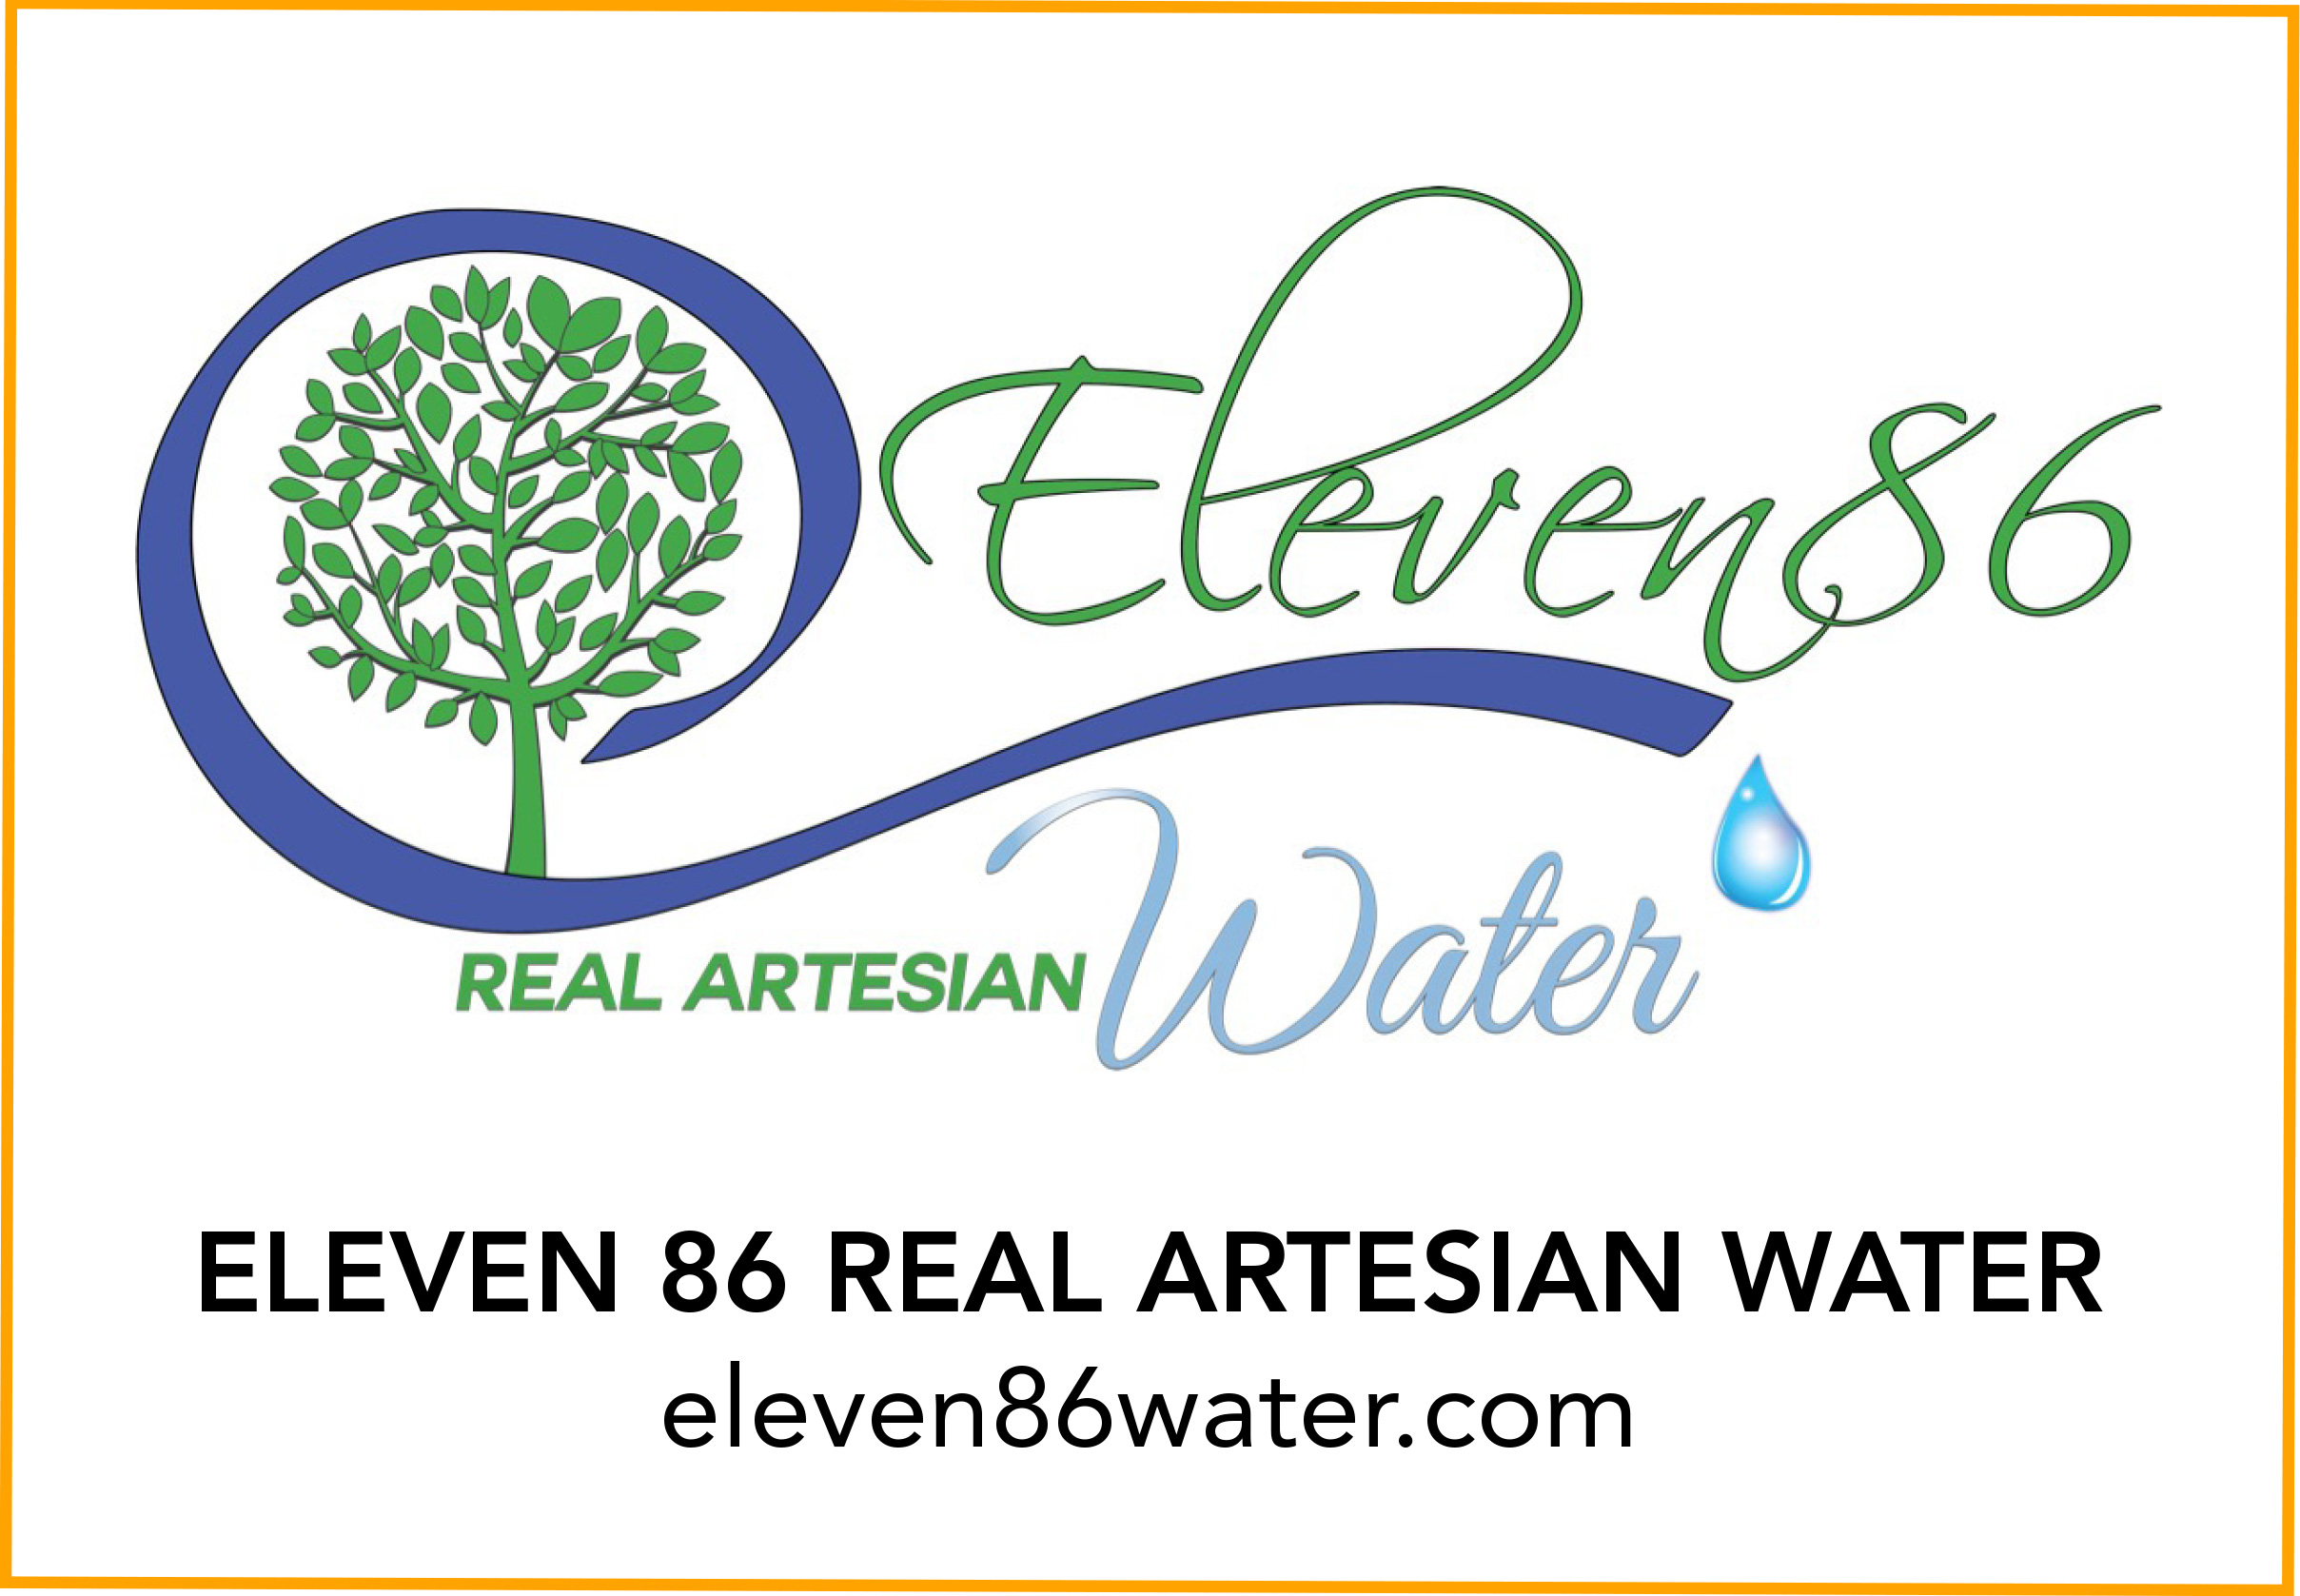 ELEVEN 86 REAL ARTESIAN WATER